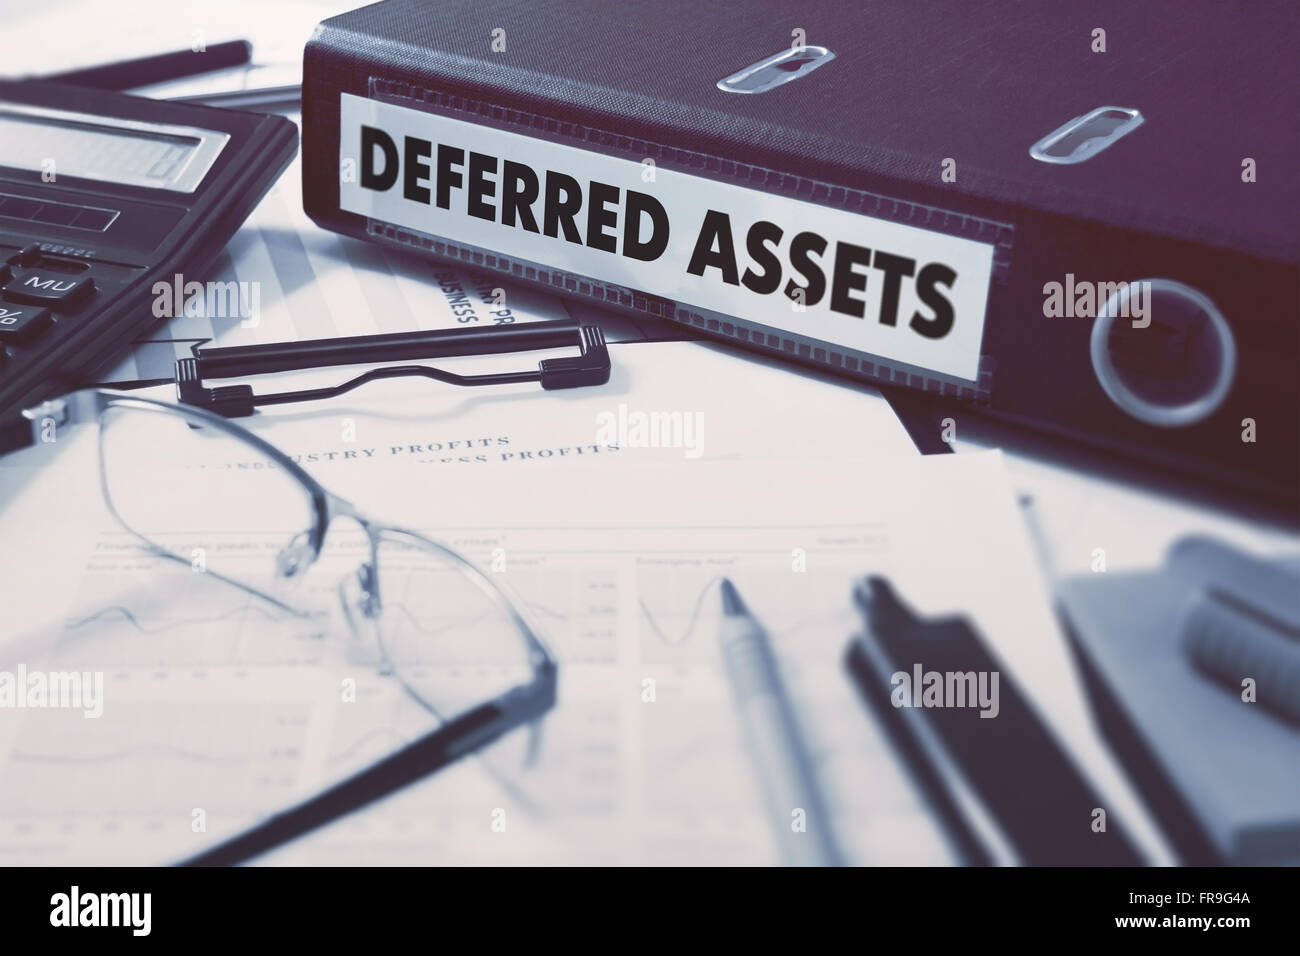 Deferred Assets on Office Folder. Toned Image. Stock Photo